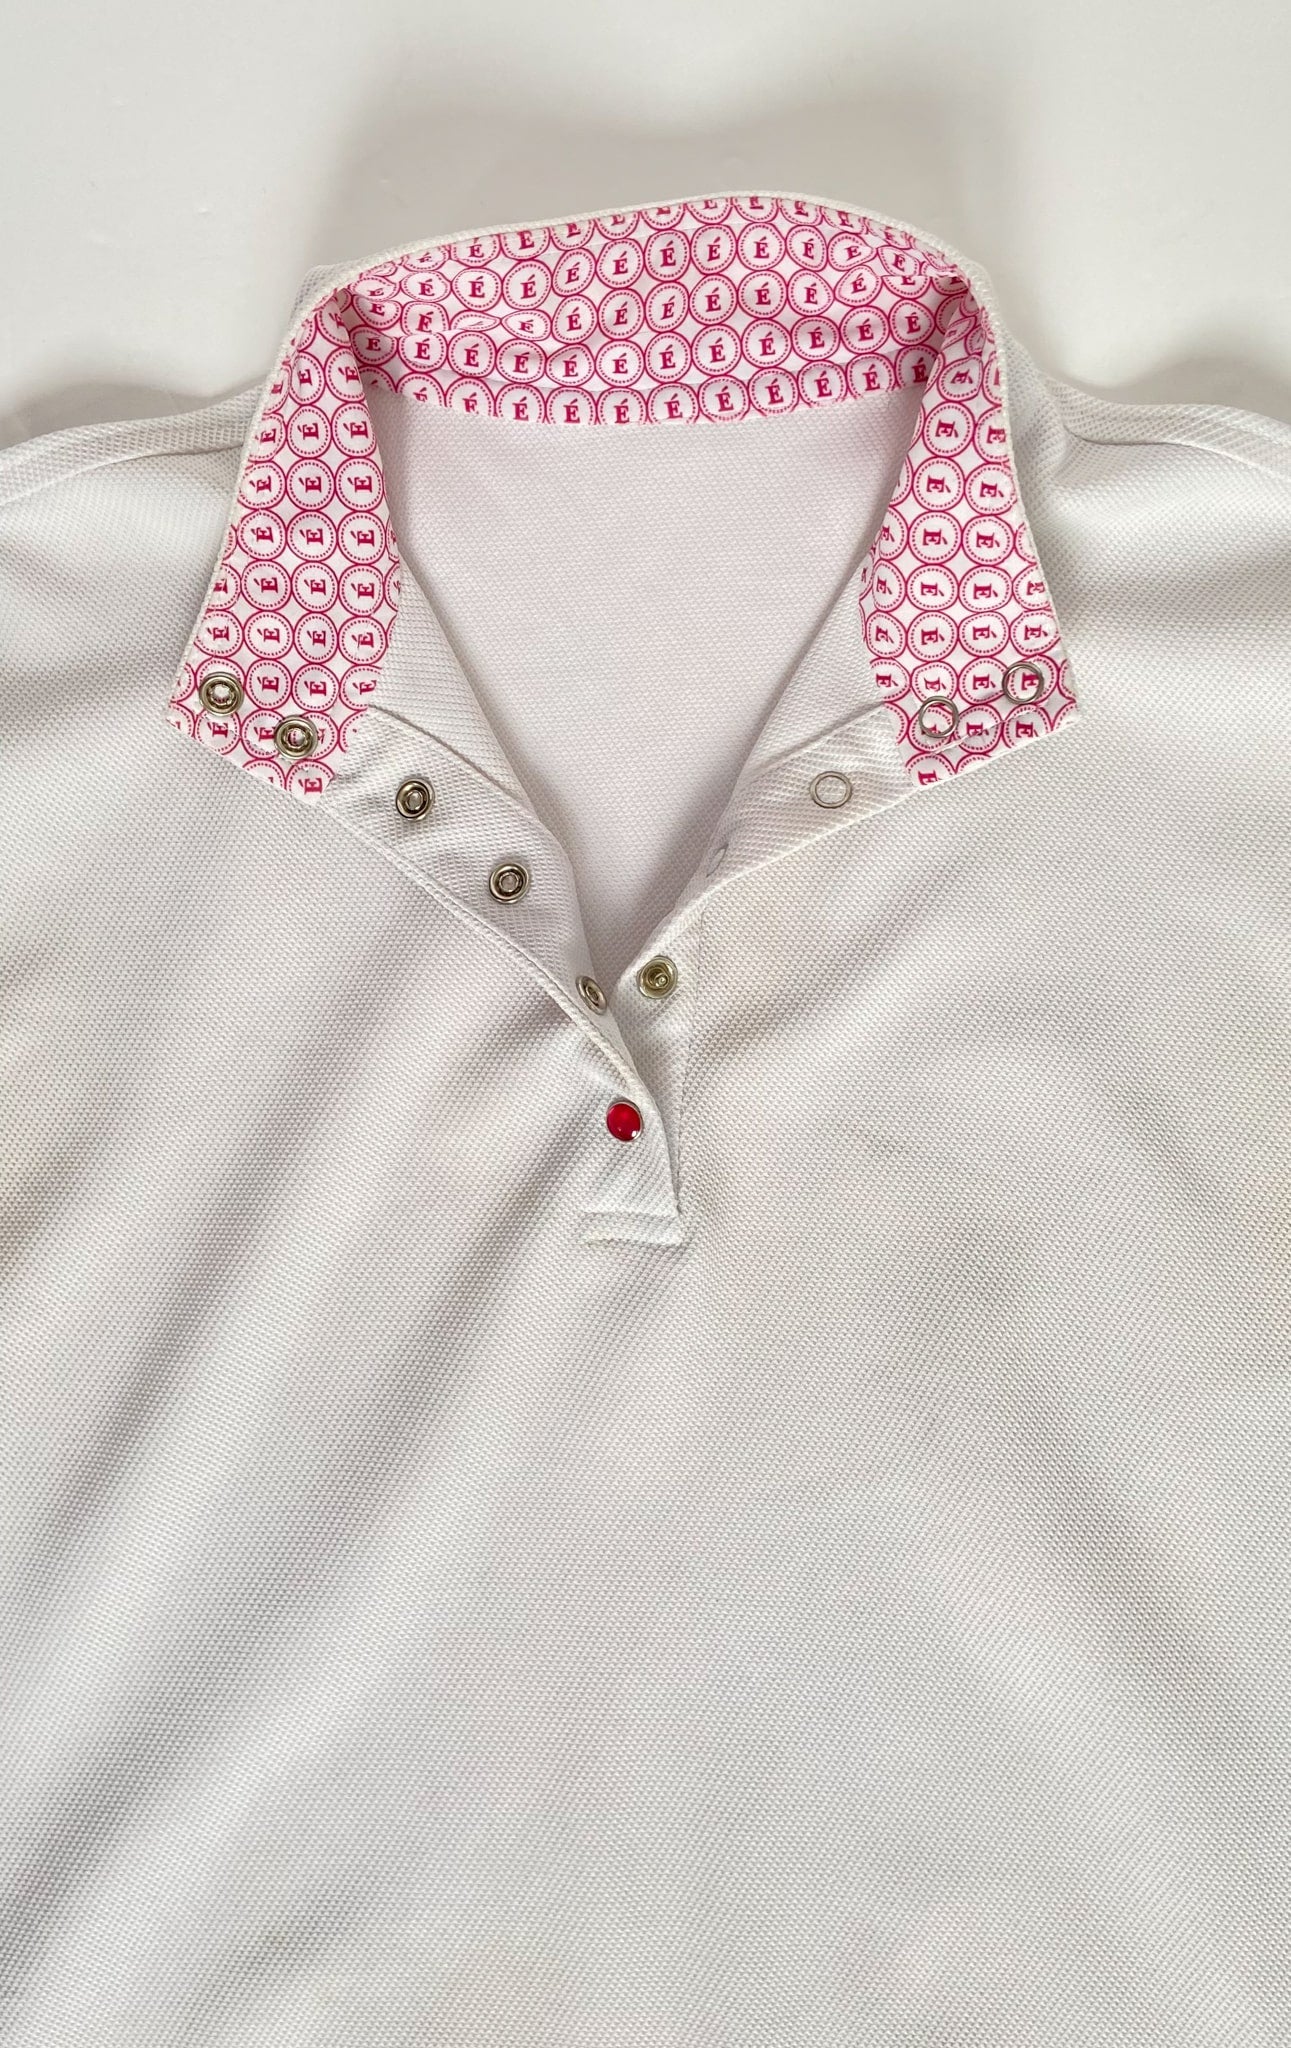 Ece Equestrian Co Sangria Cap Sleeve Competition Shirt - White - Women's Medium